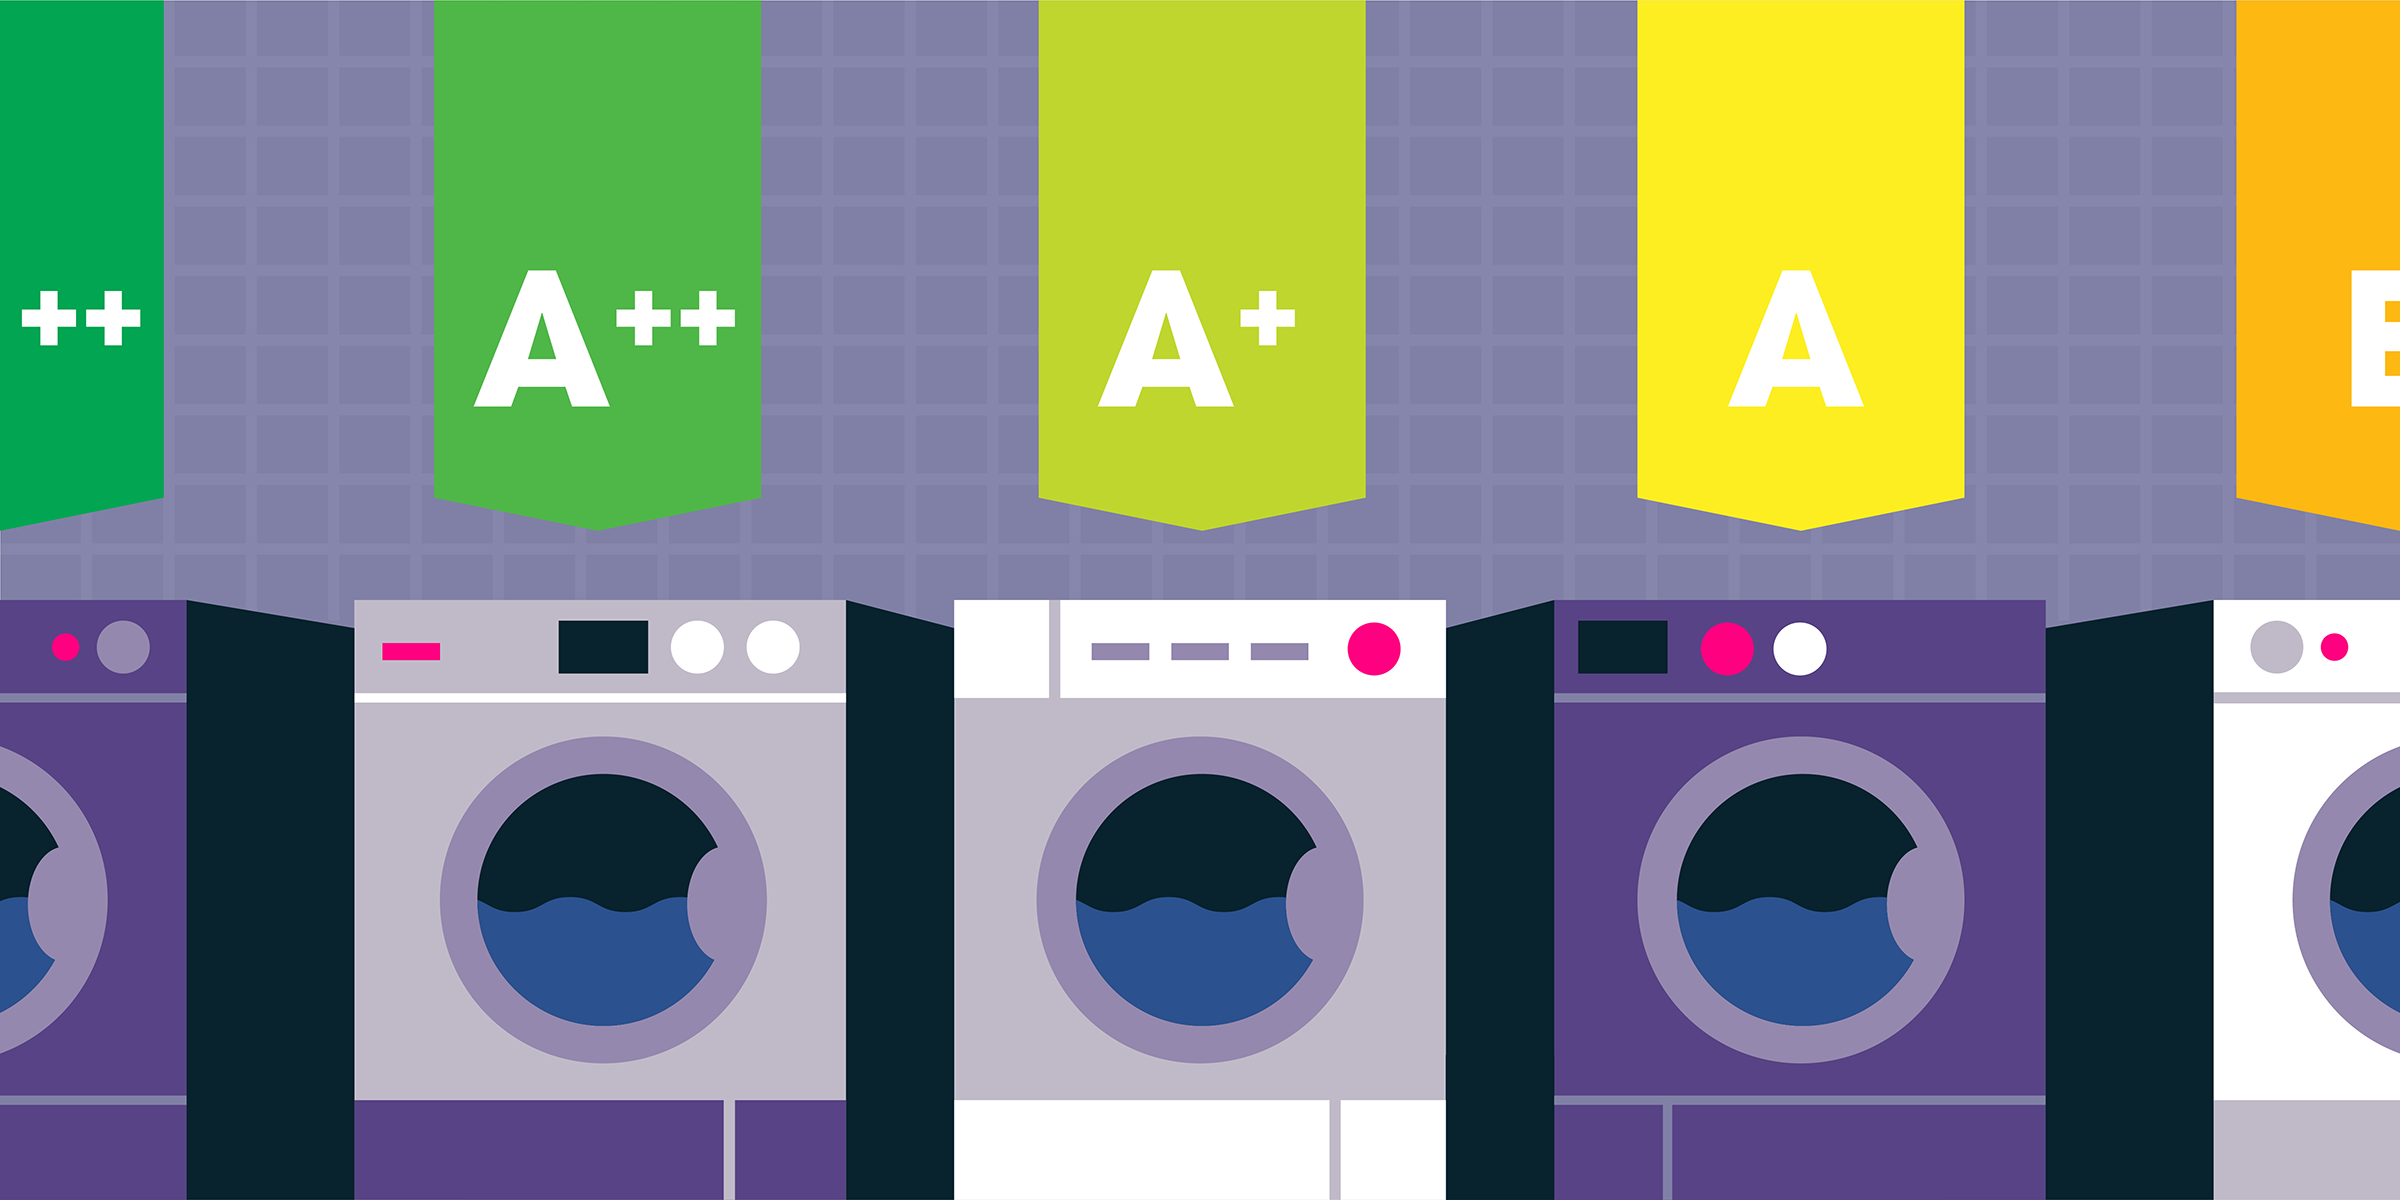 How green is my washing machine? Using energy efficiency ratings